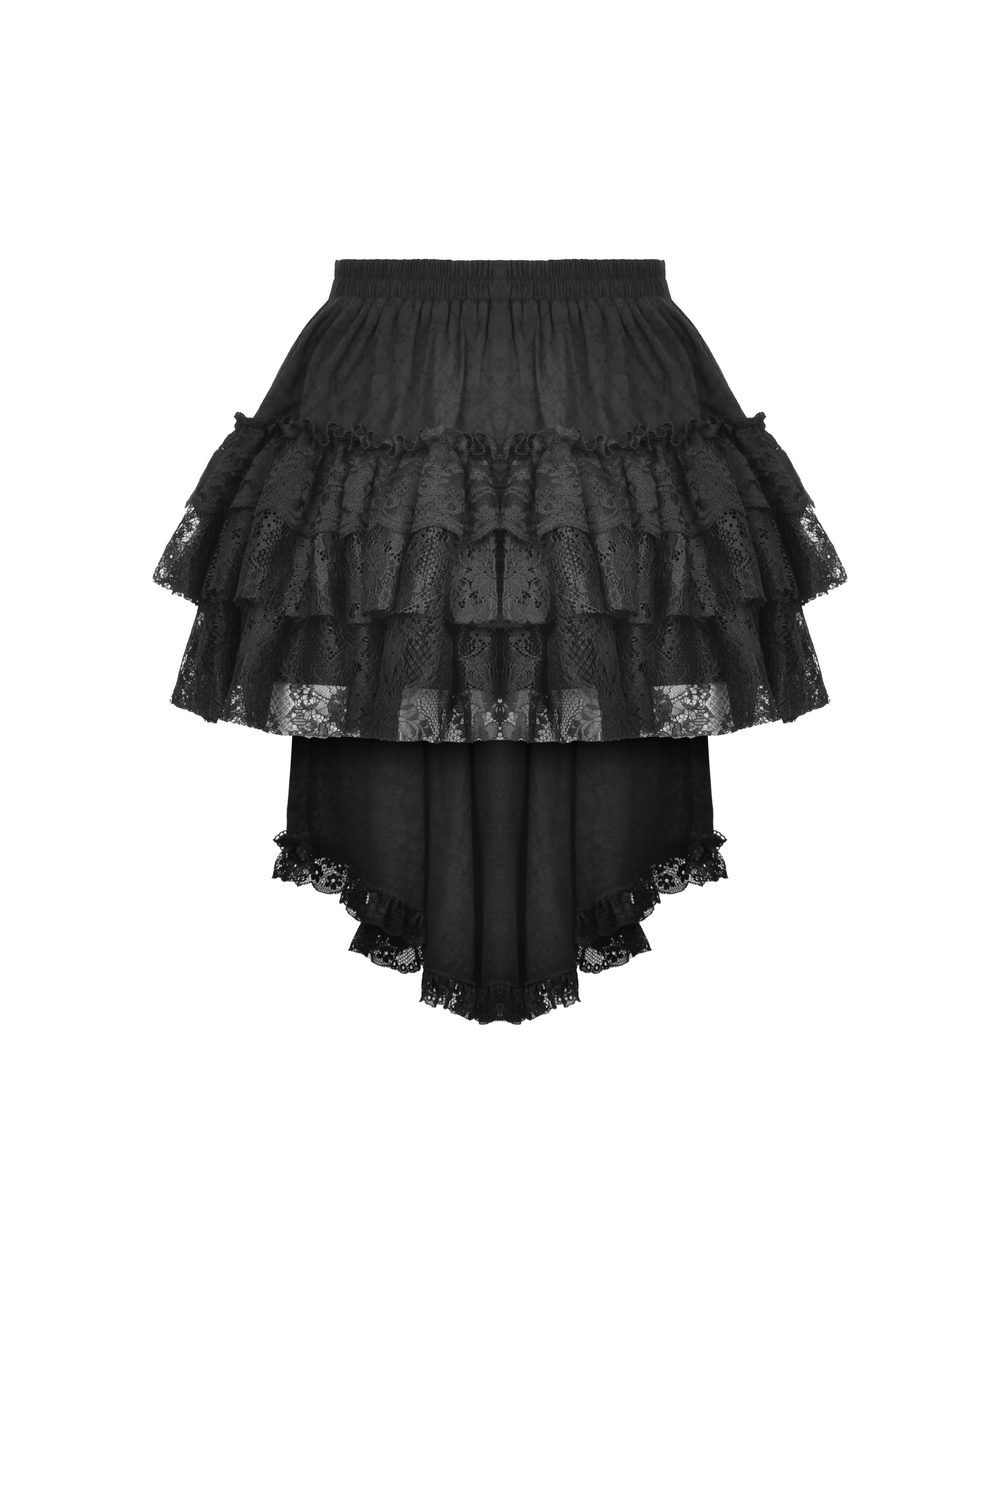 Black Tiered Ruffle Skirt with Elastic Waistband